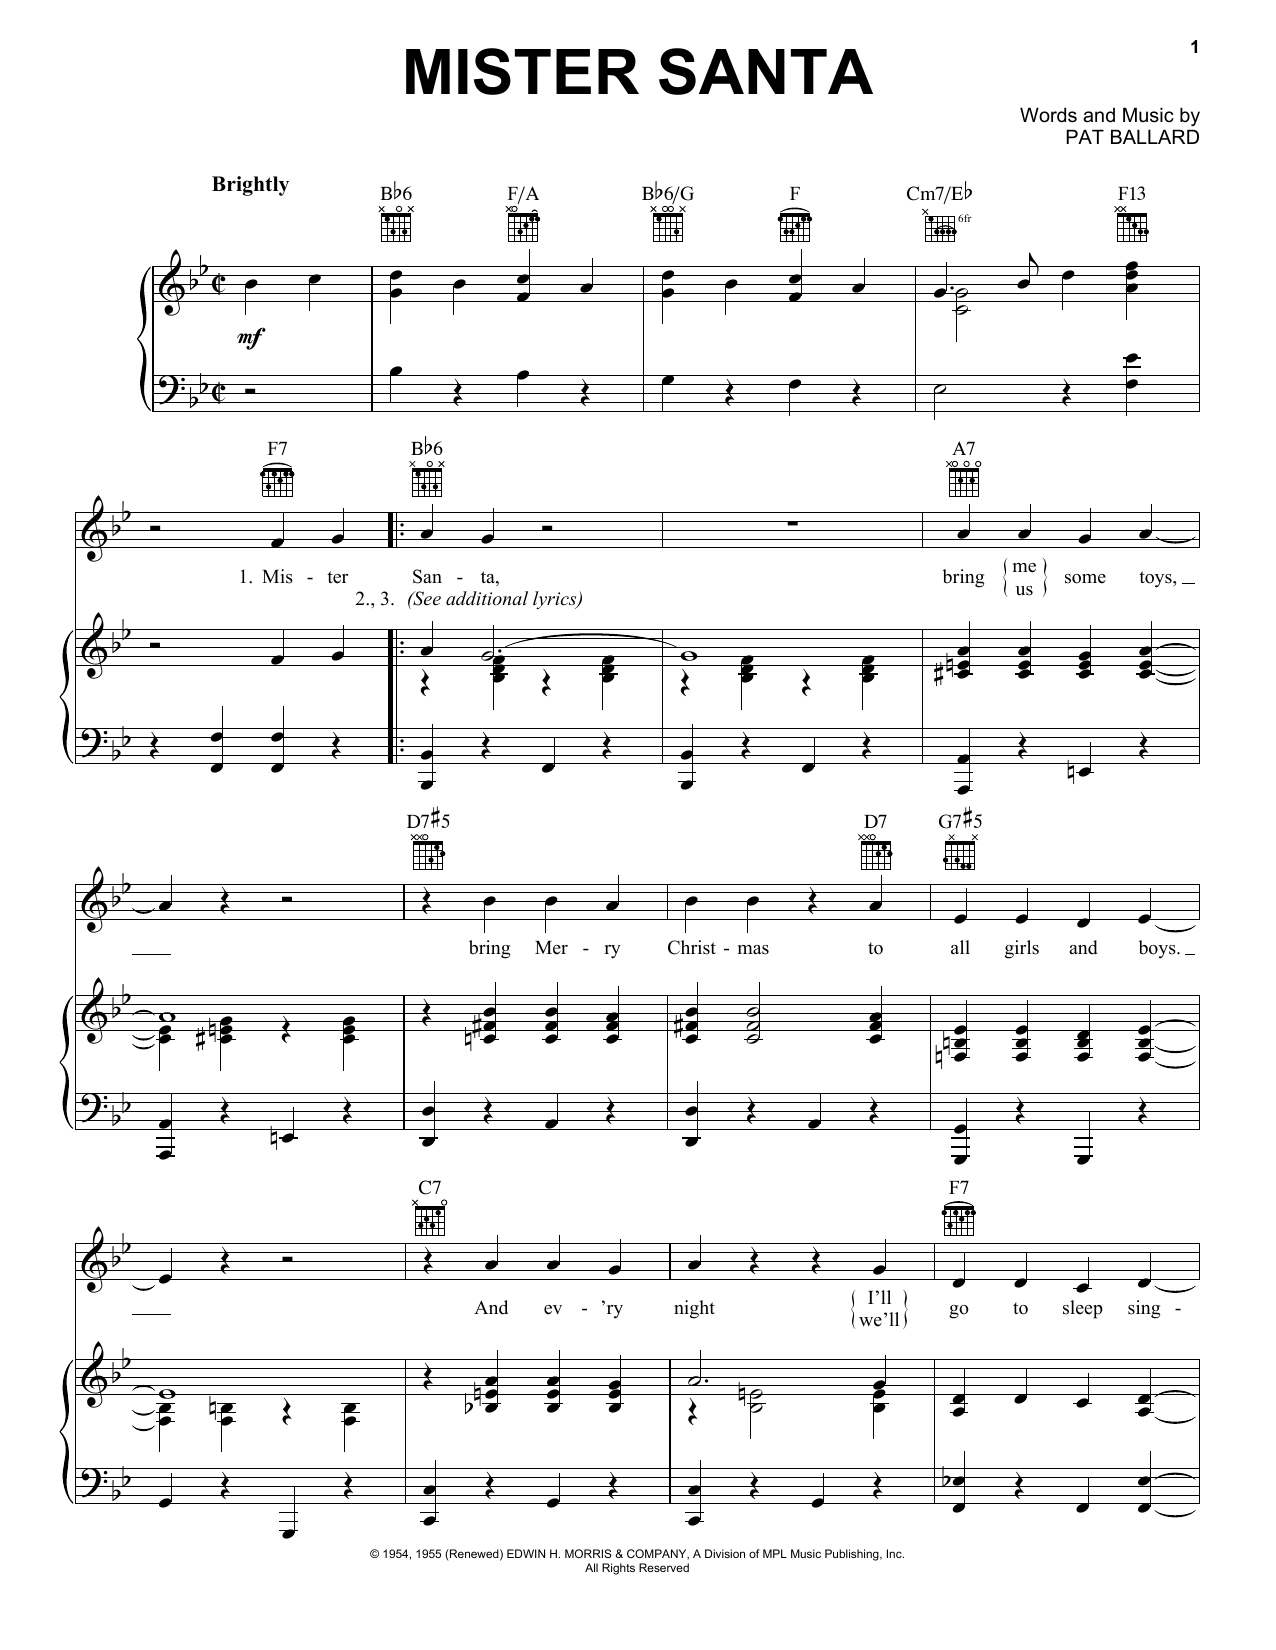 Pat Ballard Mister Santa sheet music notes and chords arranged for Easy Piano